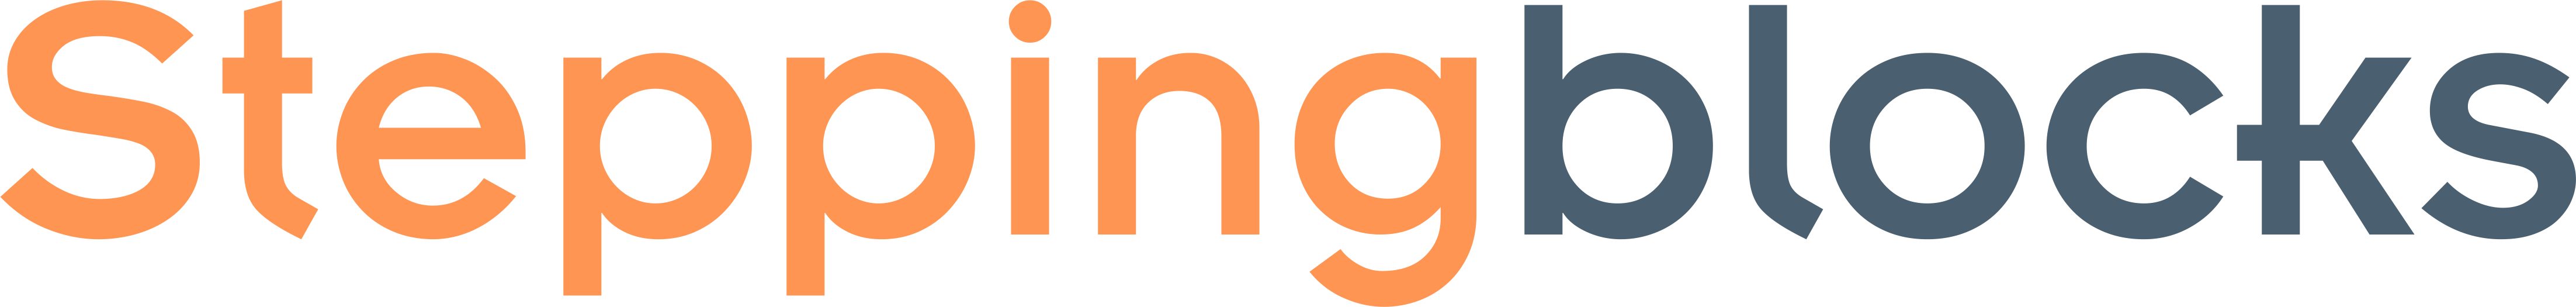 steppingblocks-logo-orange-gray.png